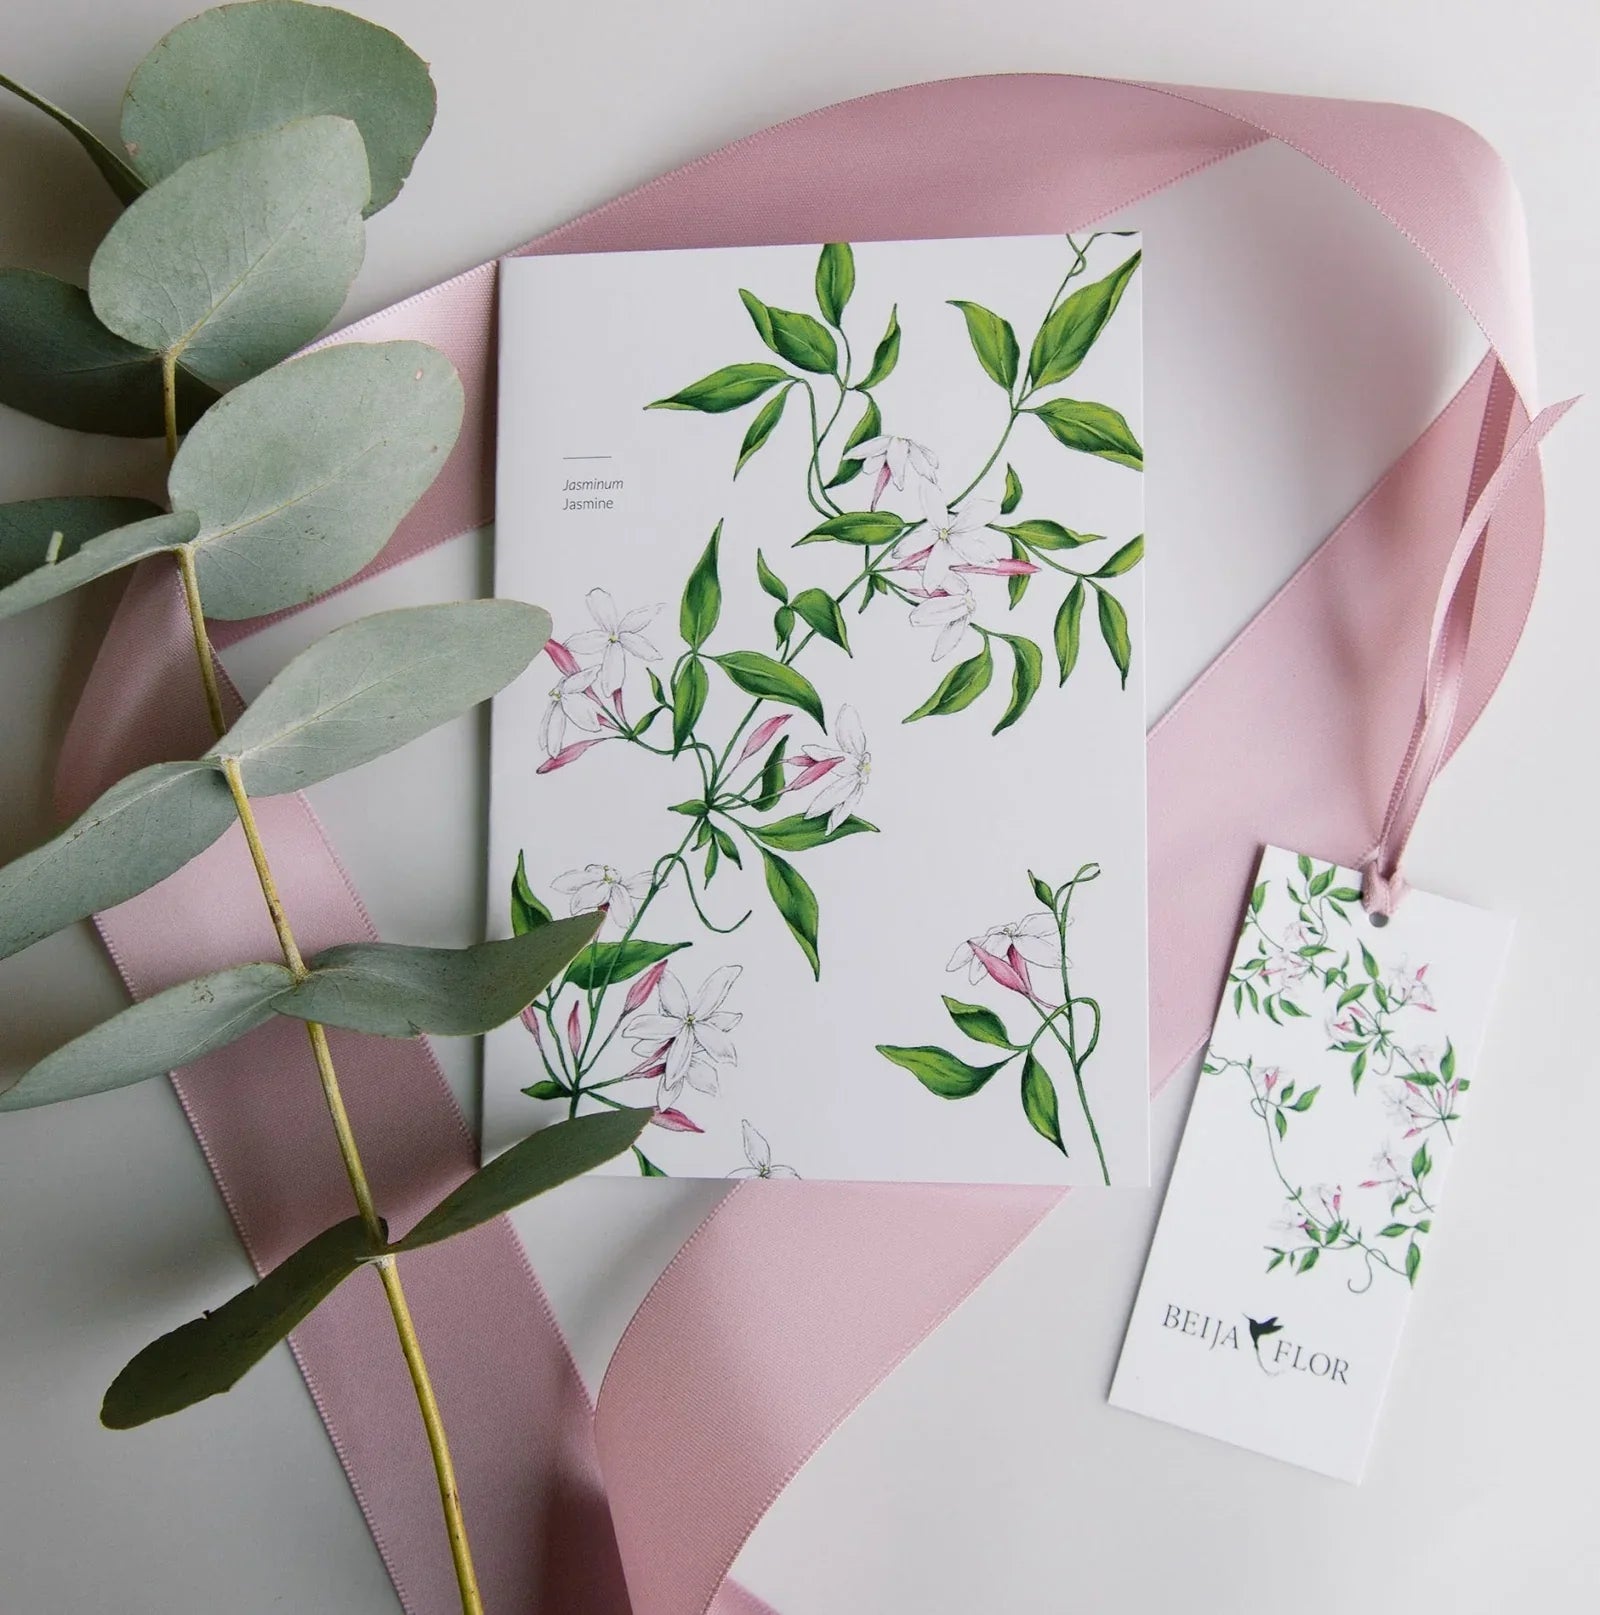 jasmine greetings card and pink ribbon